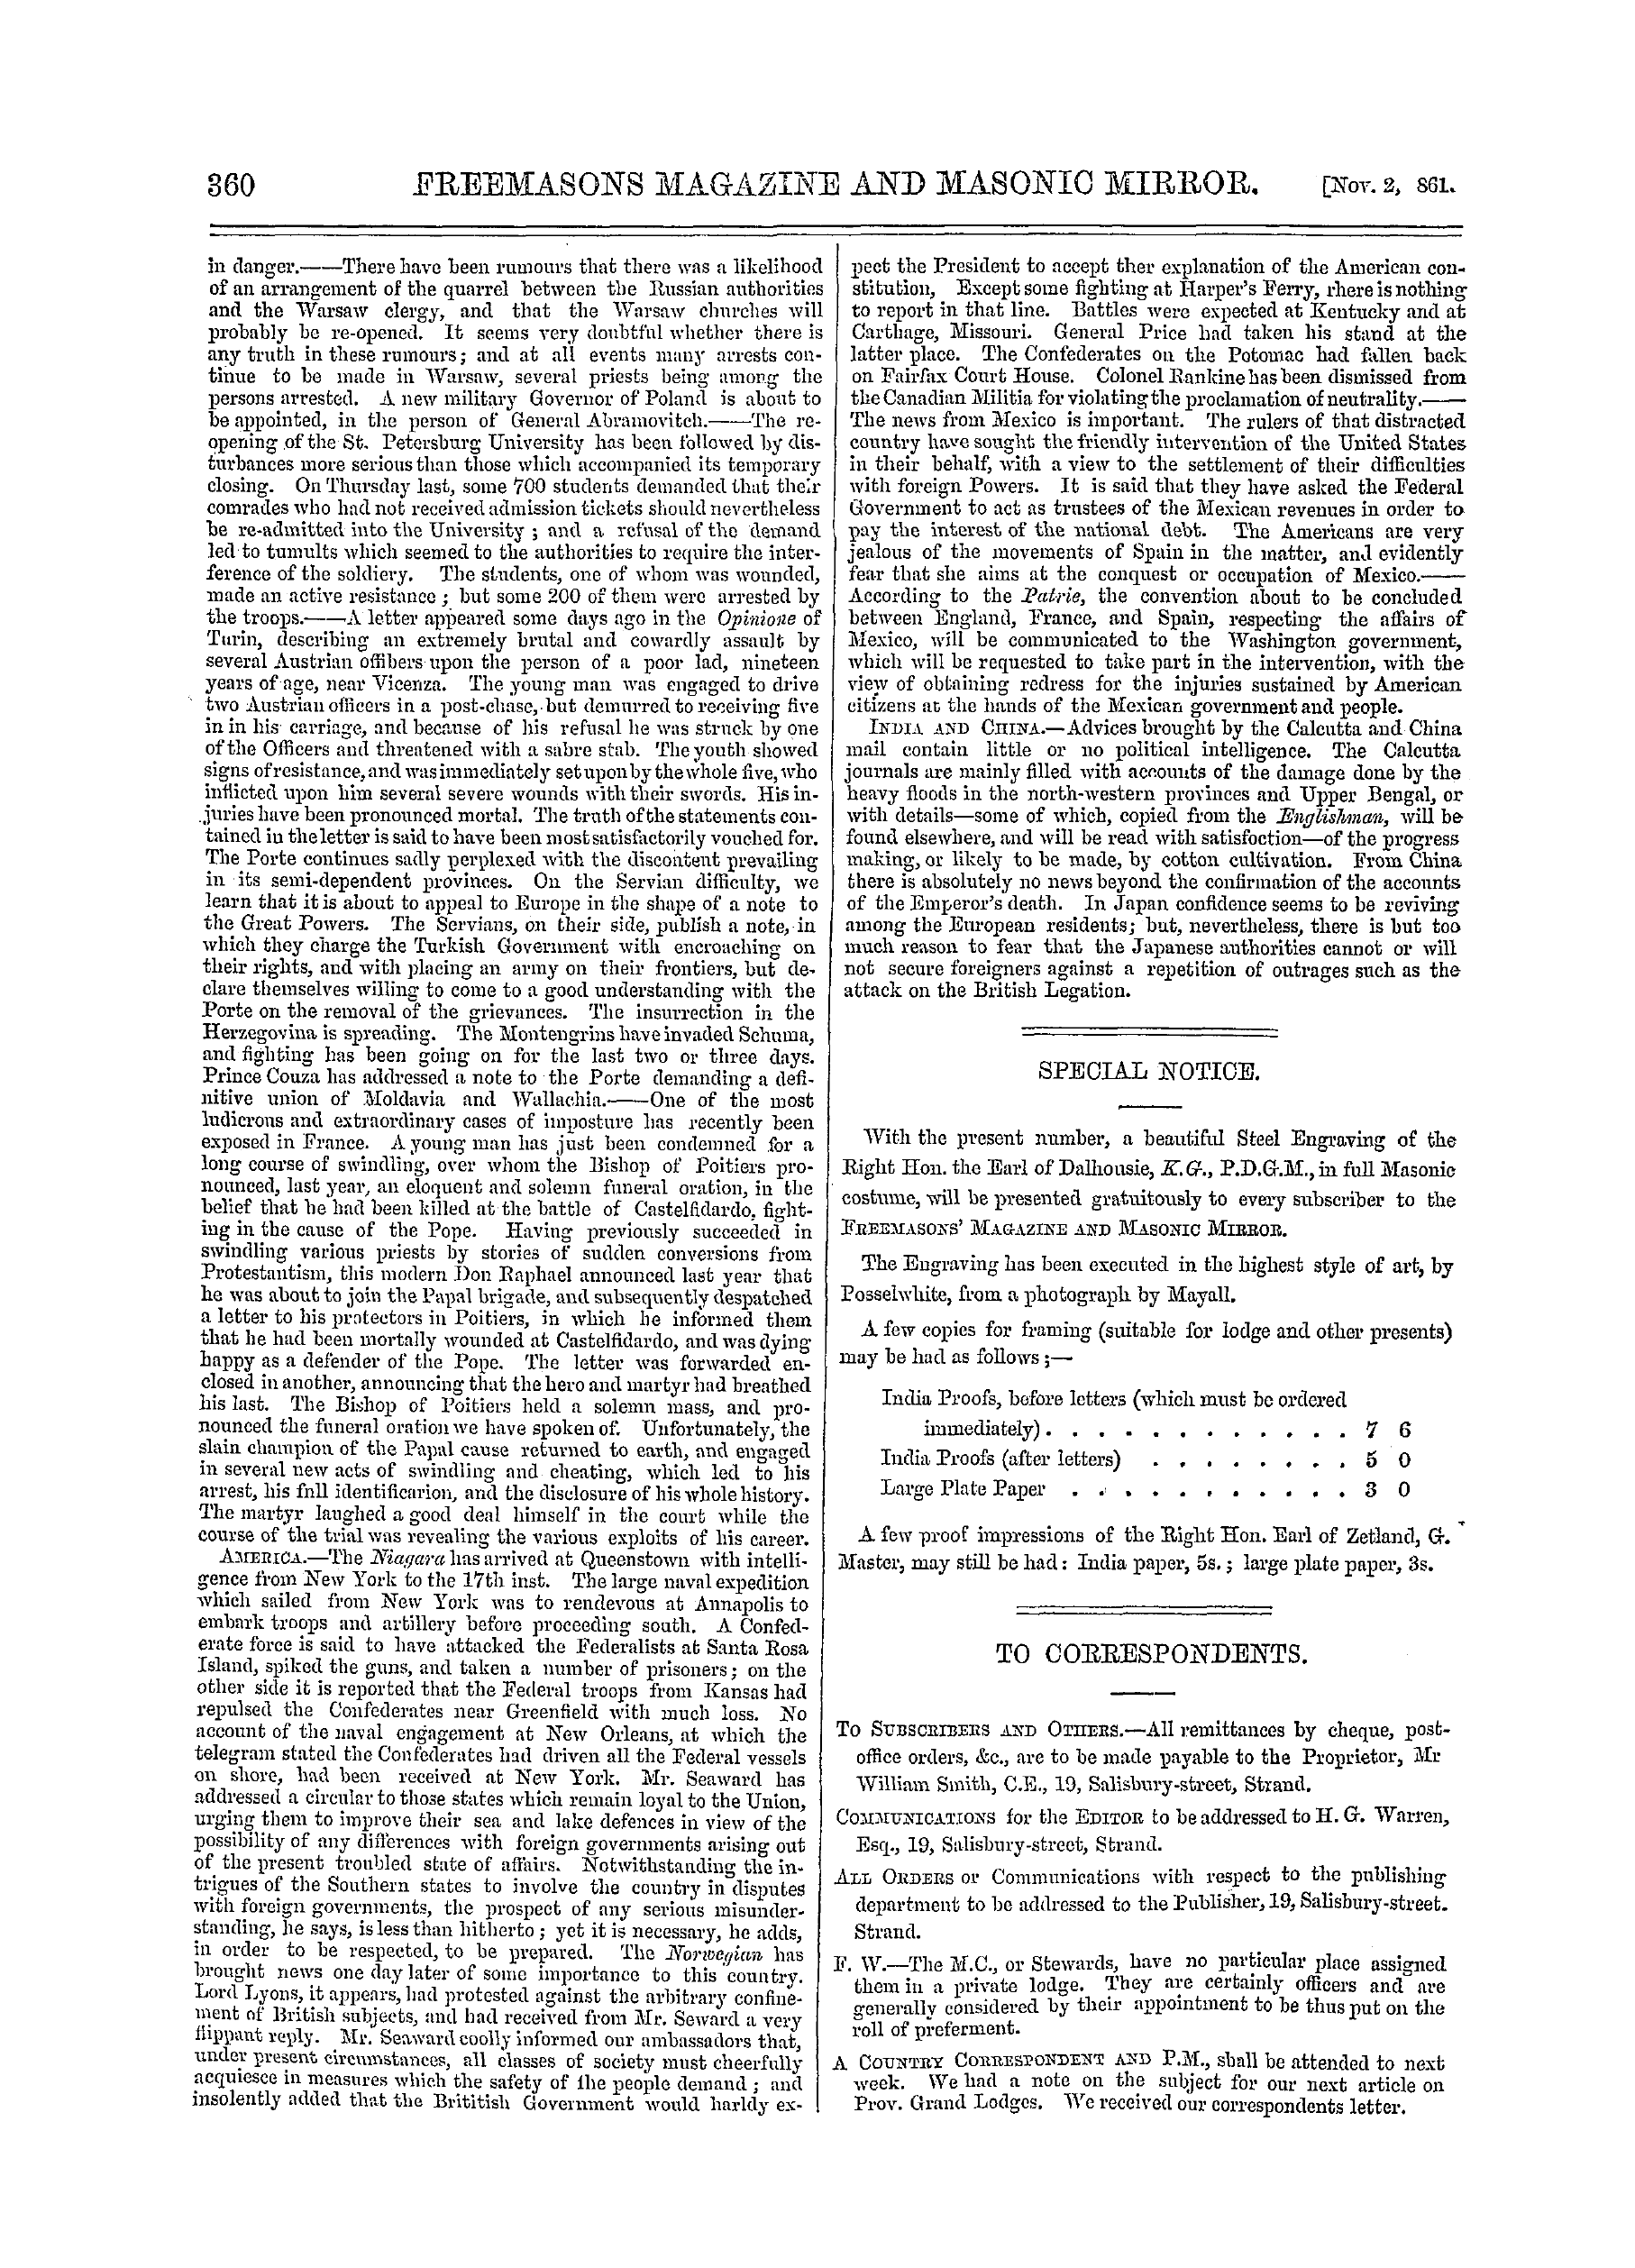 The Freemasons' Monthly Magazine: 1861-11-02 - The Week.